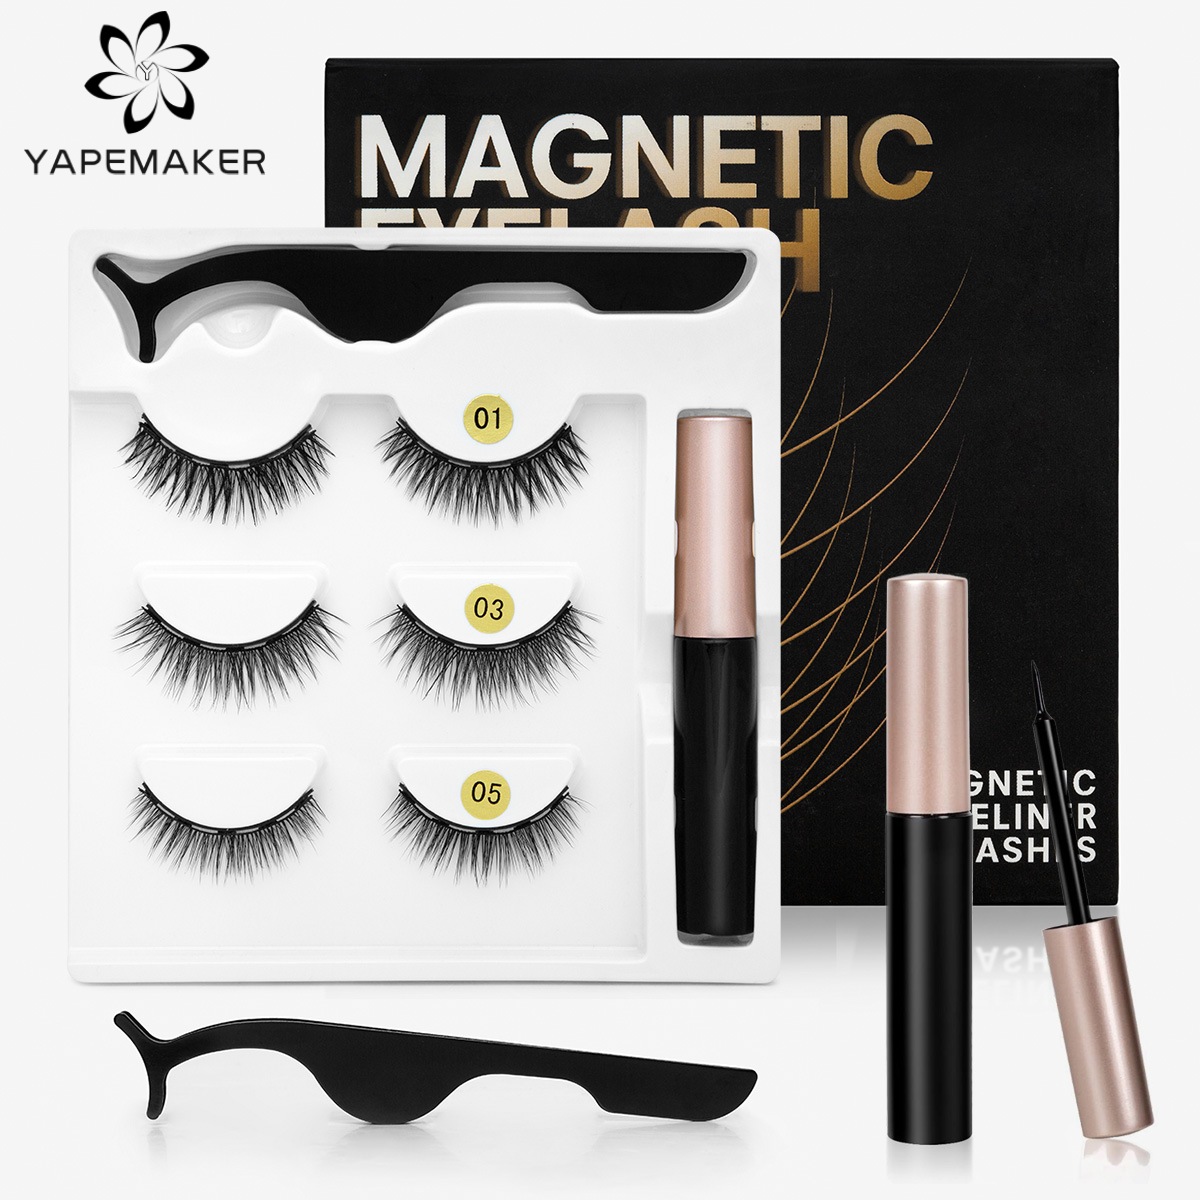 Magnetic Eyelashes 3D Mink False Lashes magnetic eyeliner Waterproof Liquid Tweezers Set Lasting Handmade Eyelash Makeup Tool